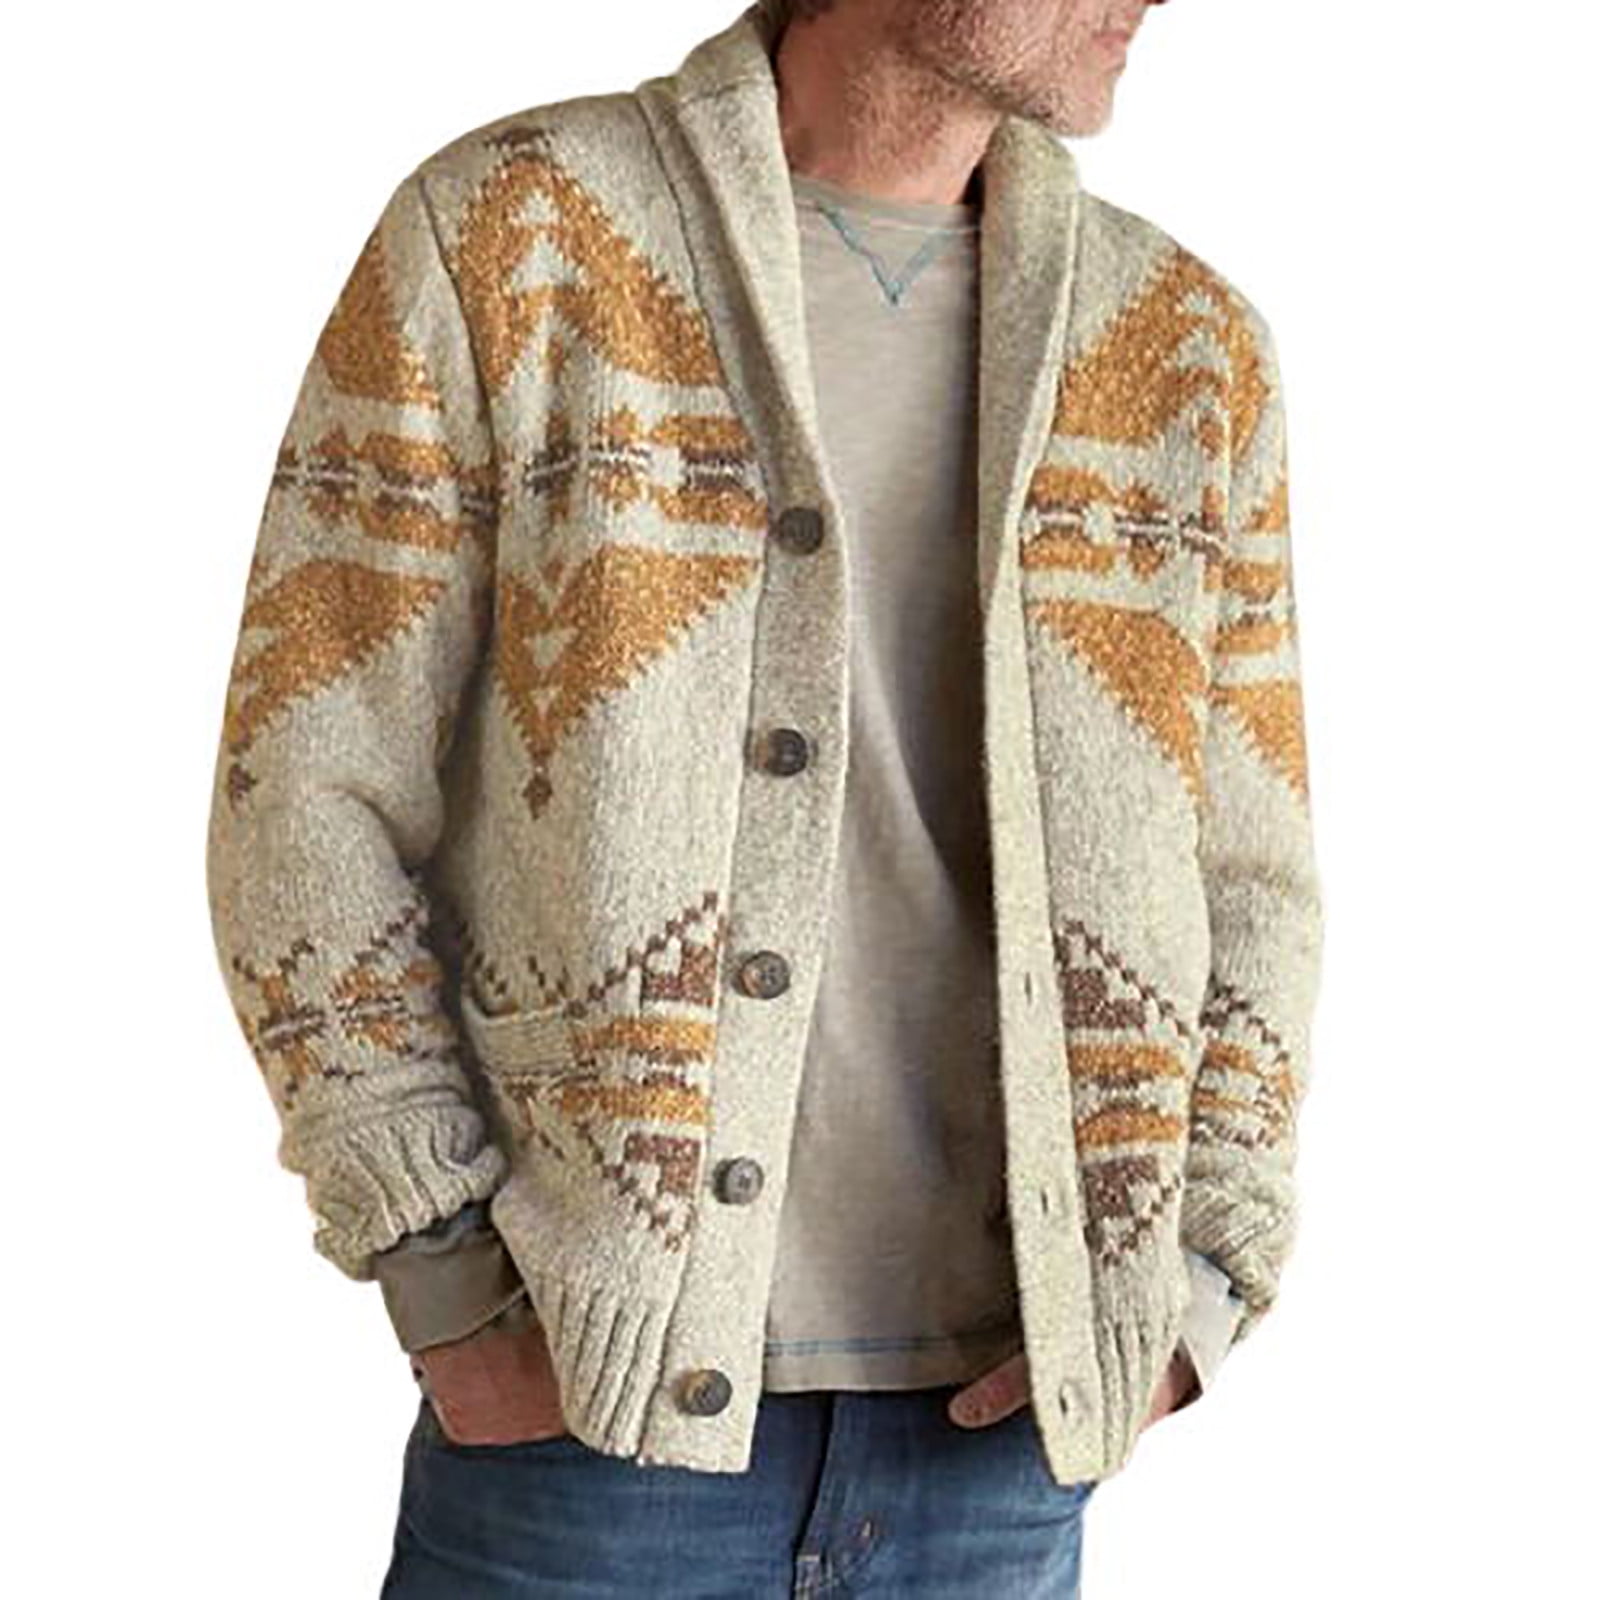 Hfyihgf Cardigan Sweaters for Men Retro Aztec Print Button up Sweaters ...